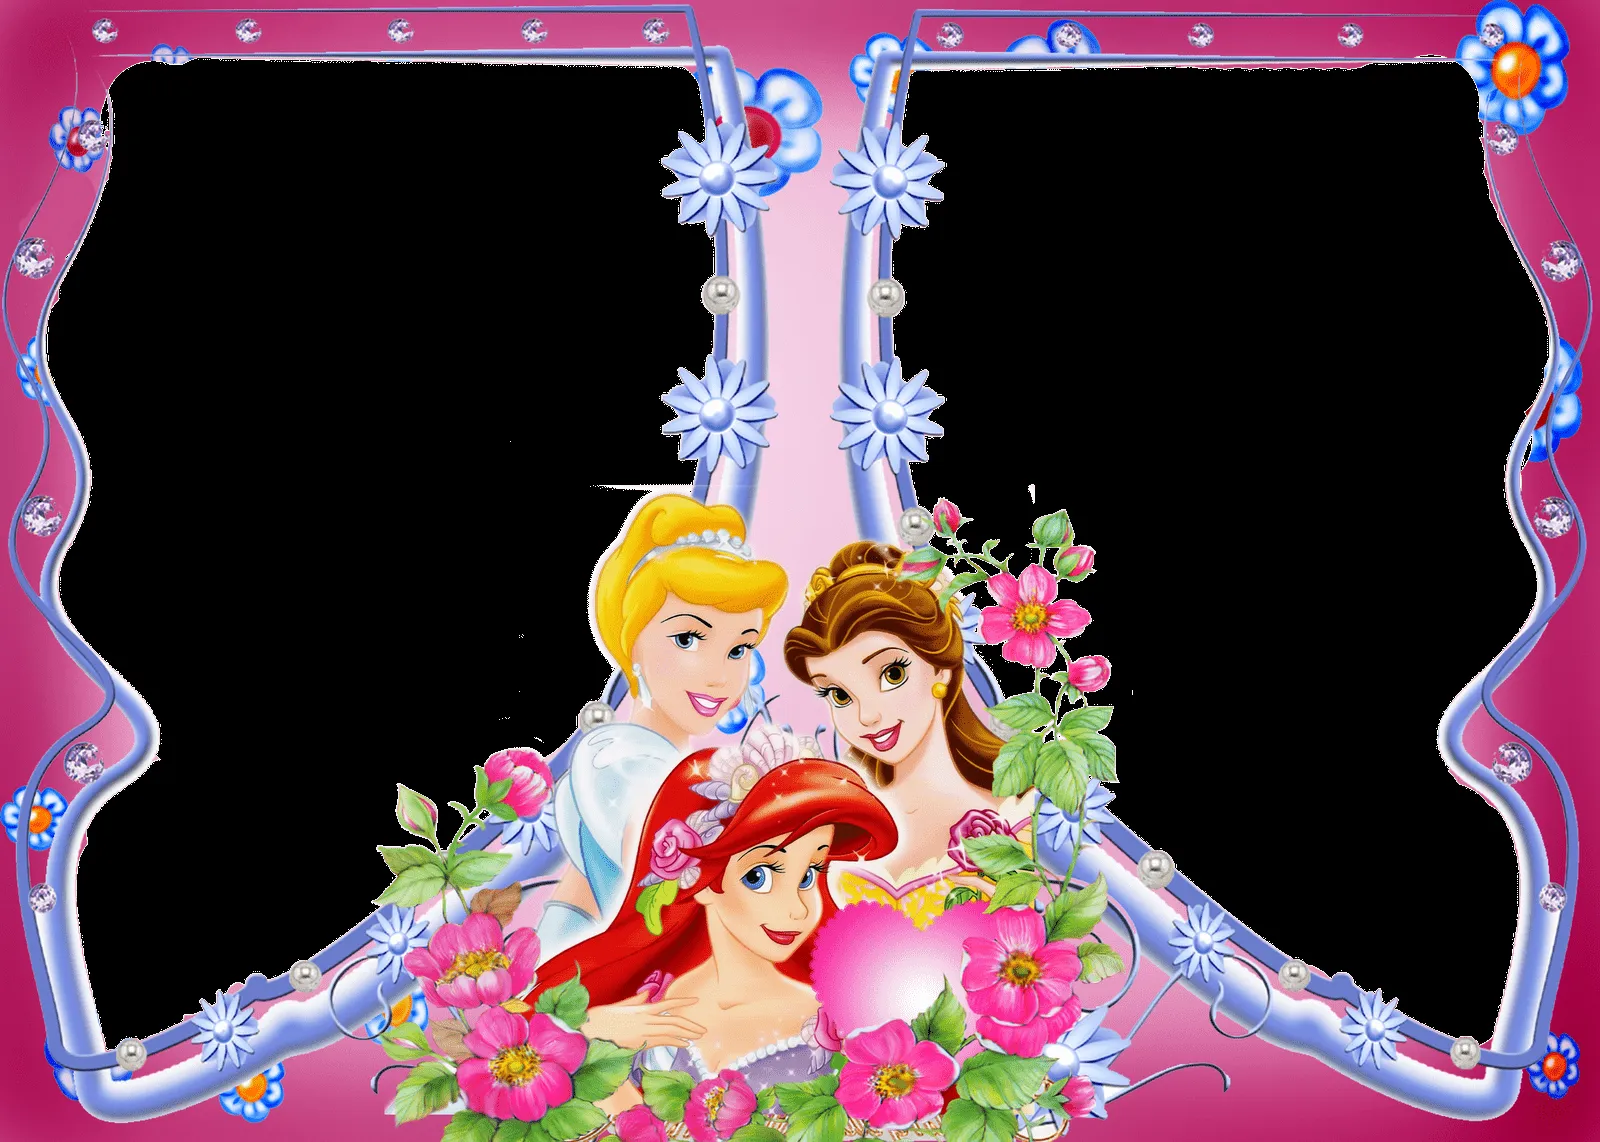 Disney Princess Frame Png - Viewing Gallery